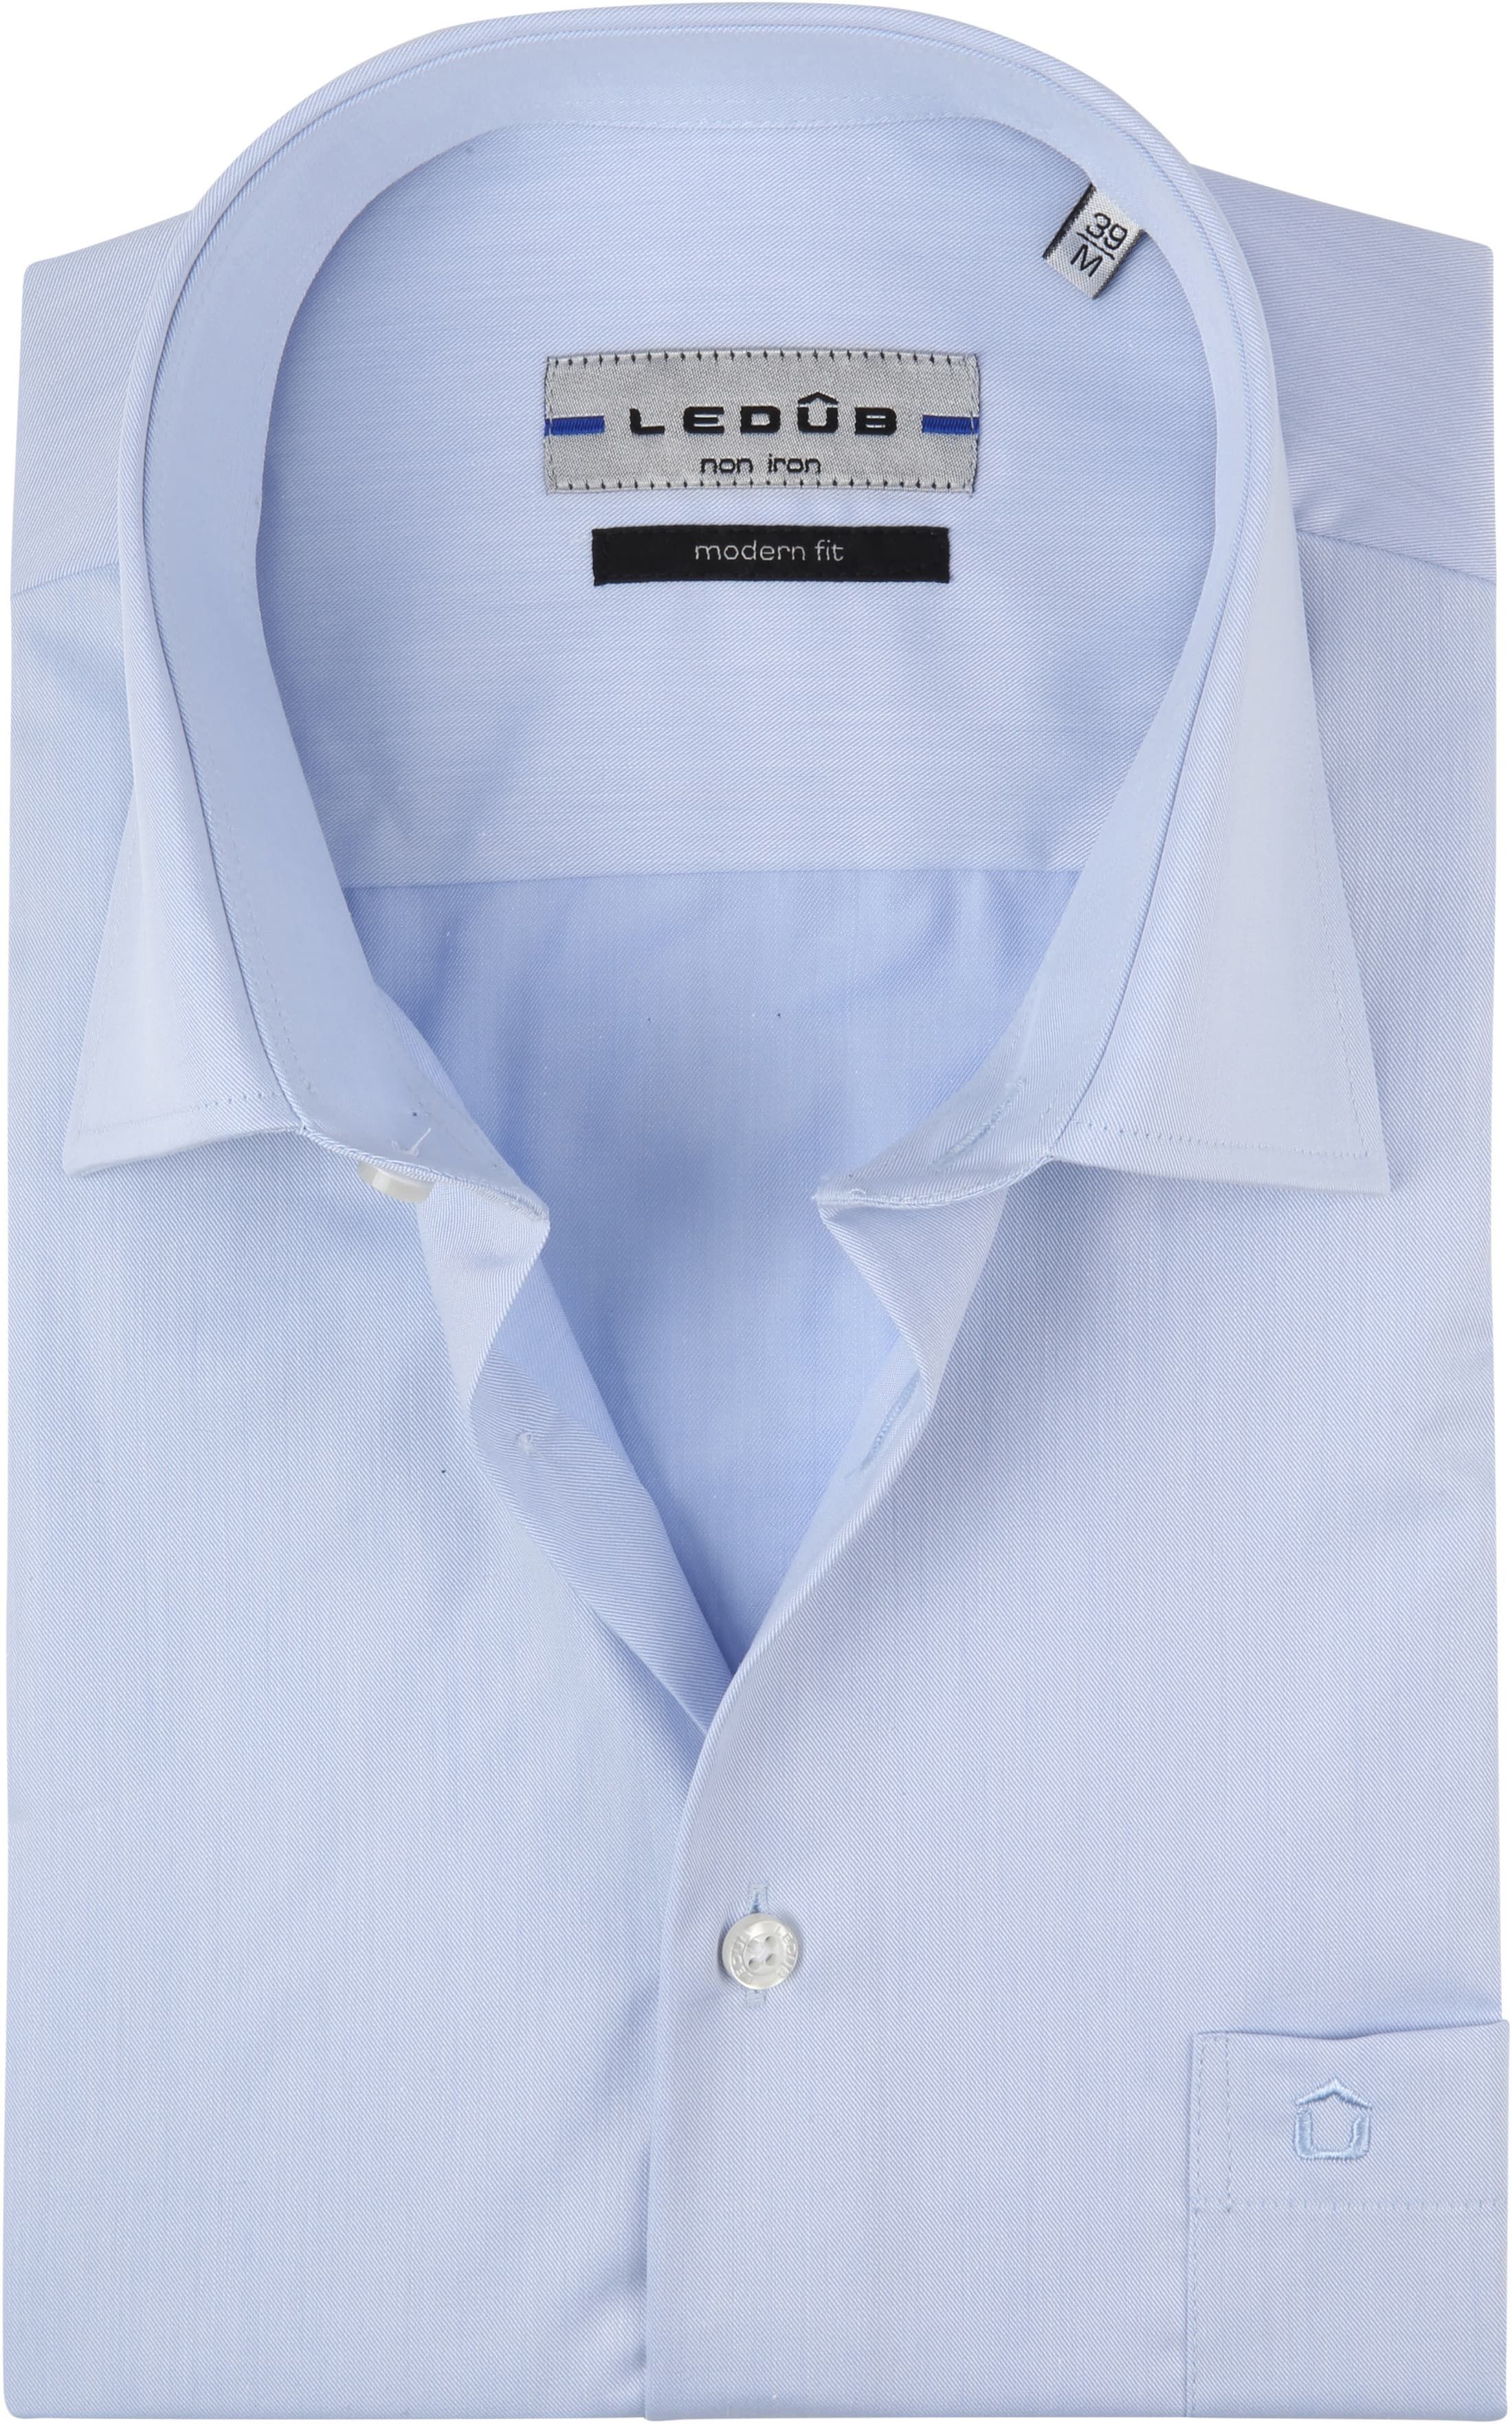 Ledub Shirt Short Sleeve Light Blue size 15 1/2